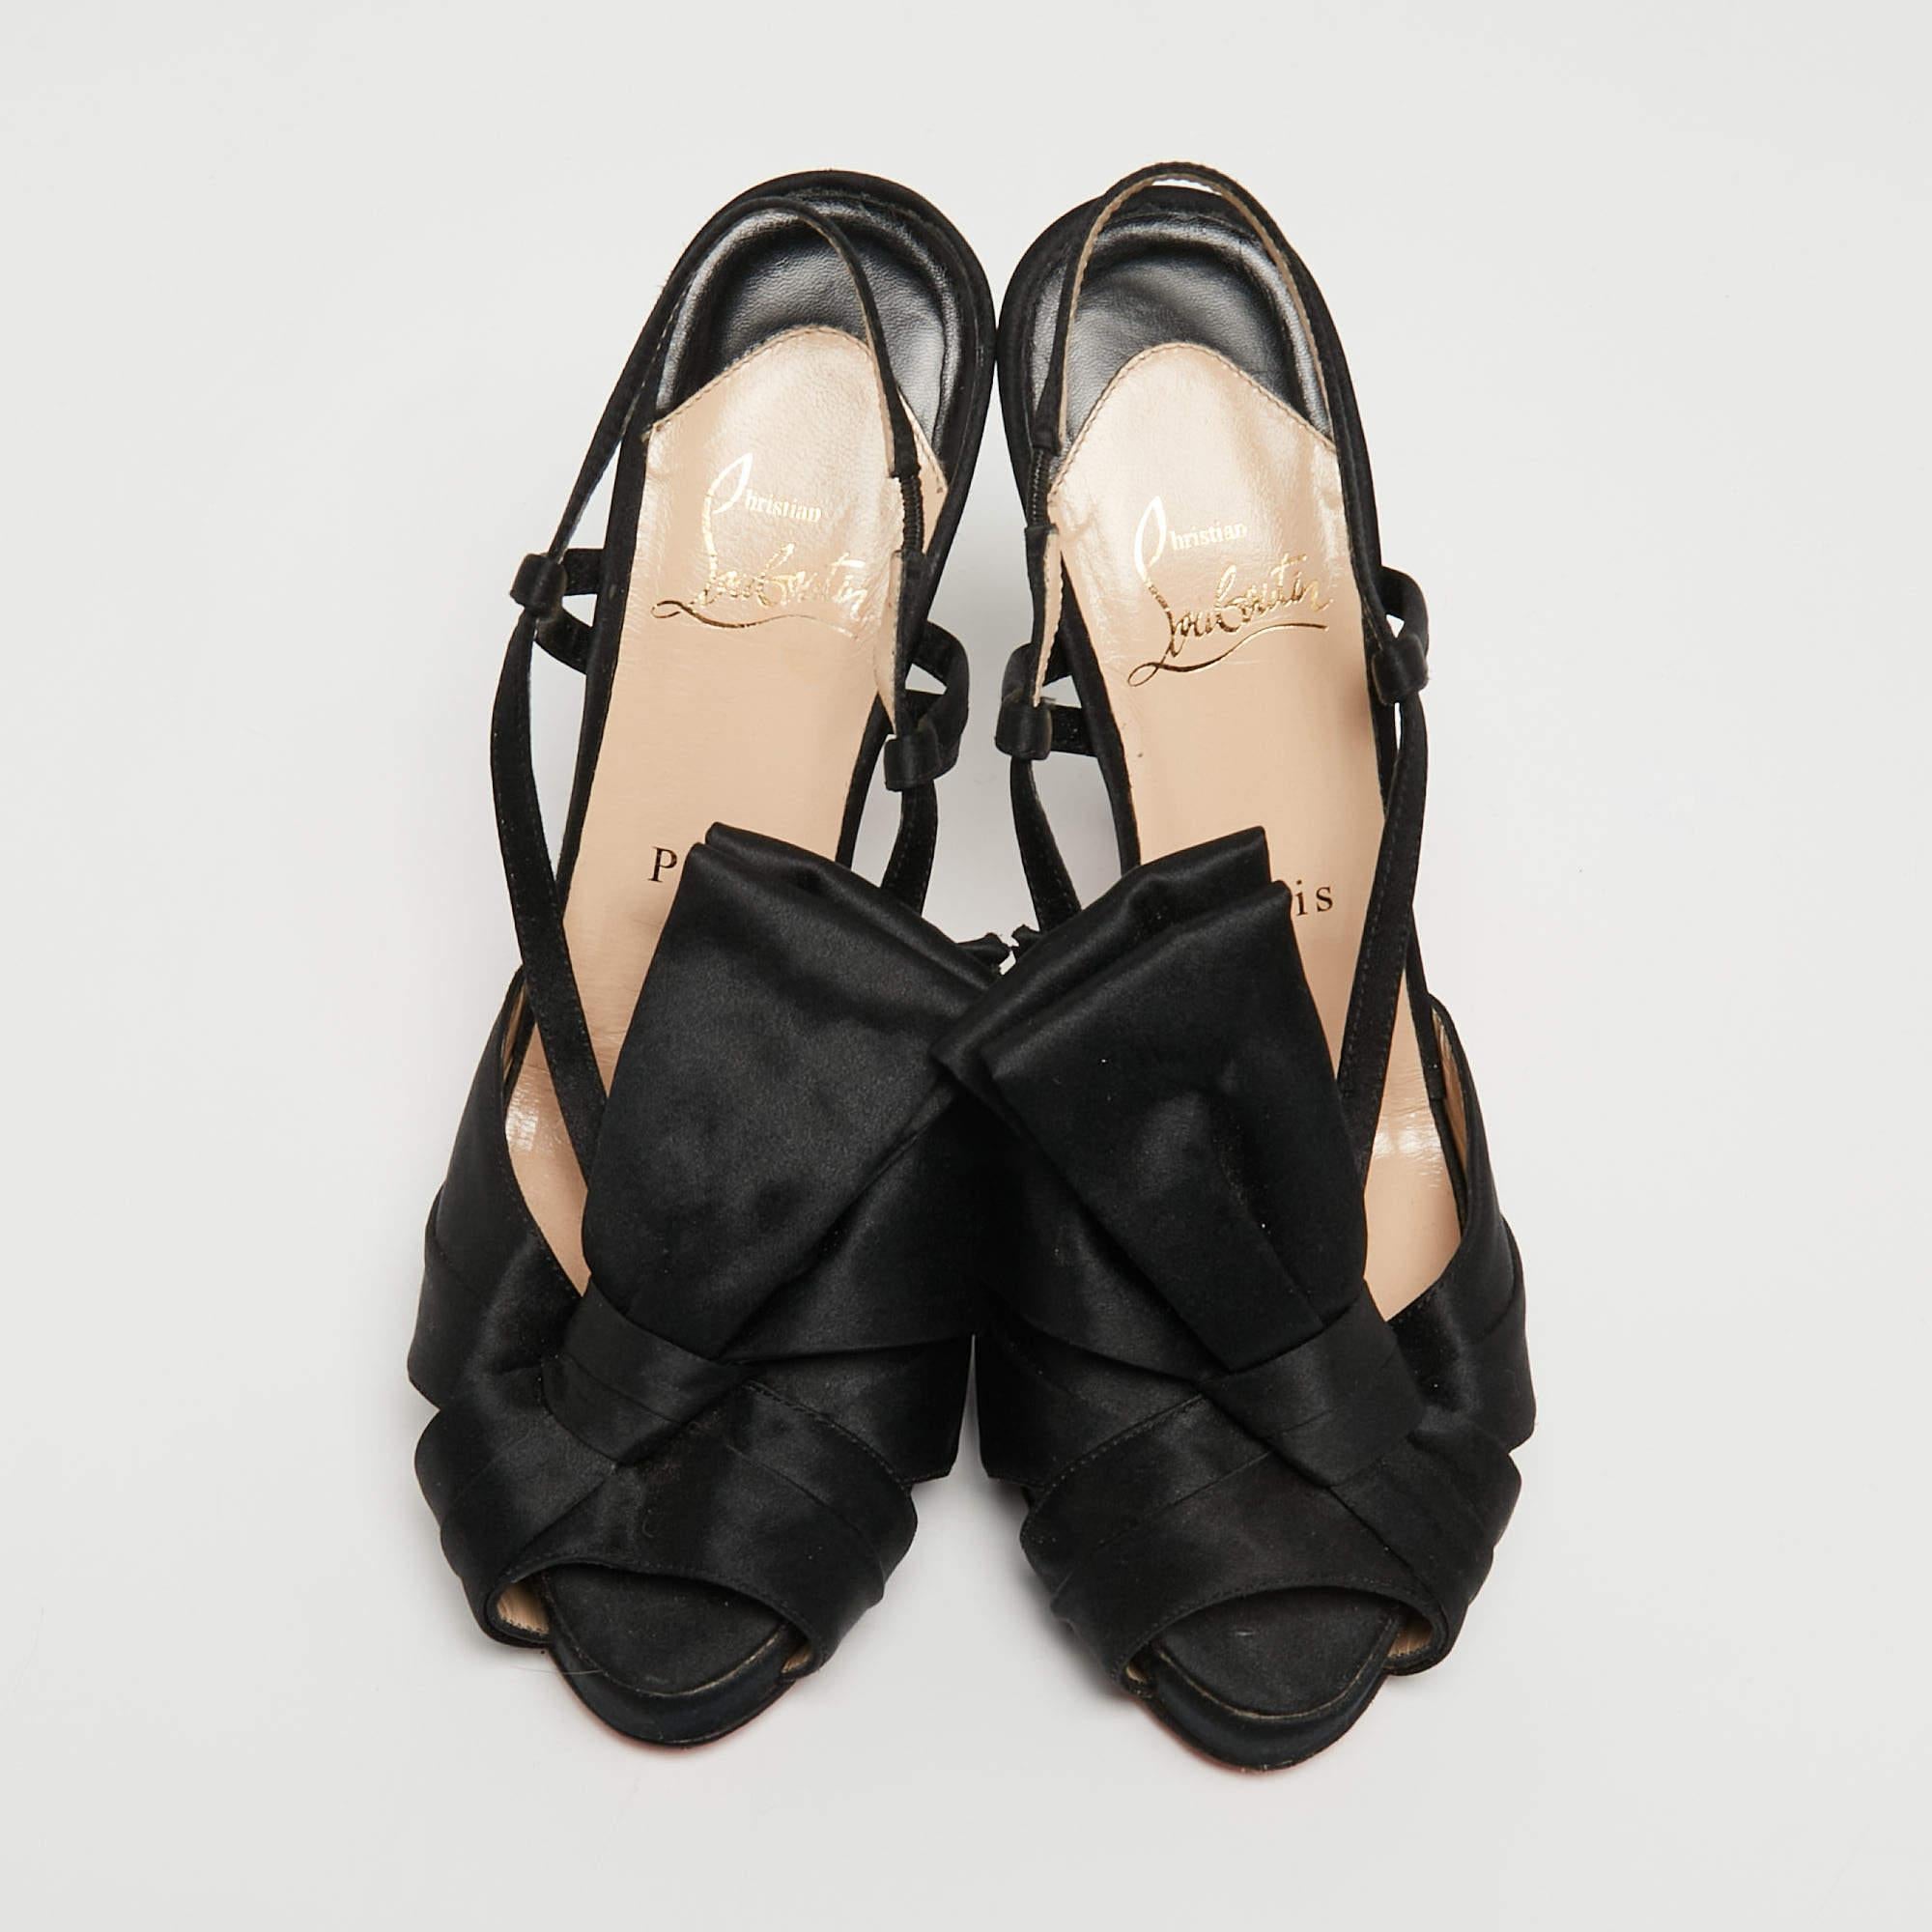 Christian Louboutin Black Satin Bow Slingback Sandals Size 37.5 In Good Condition For Sale In Dubai, Al Qouz 2